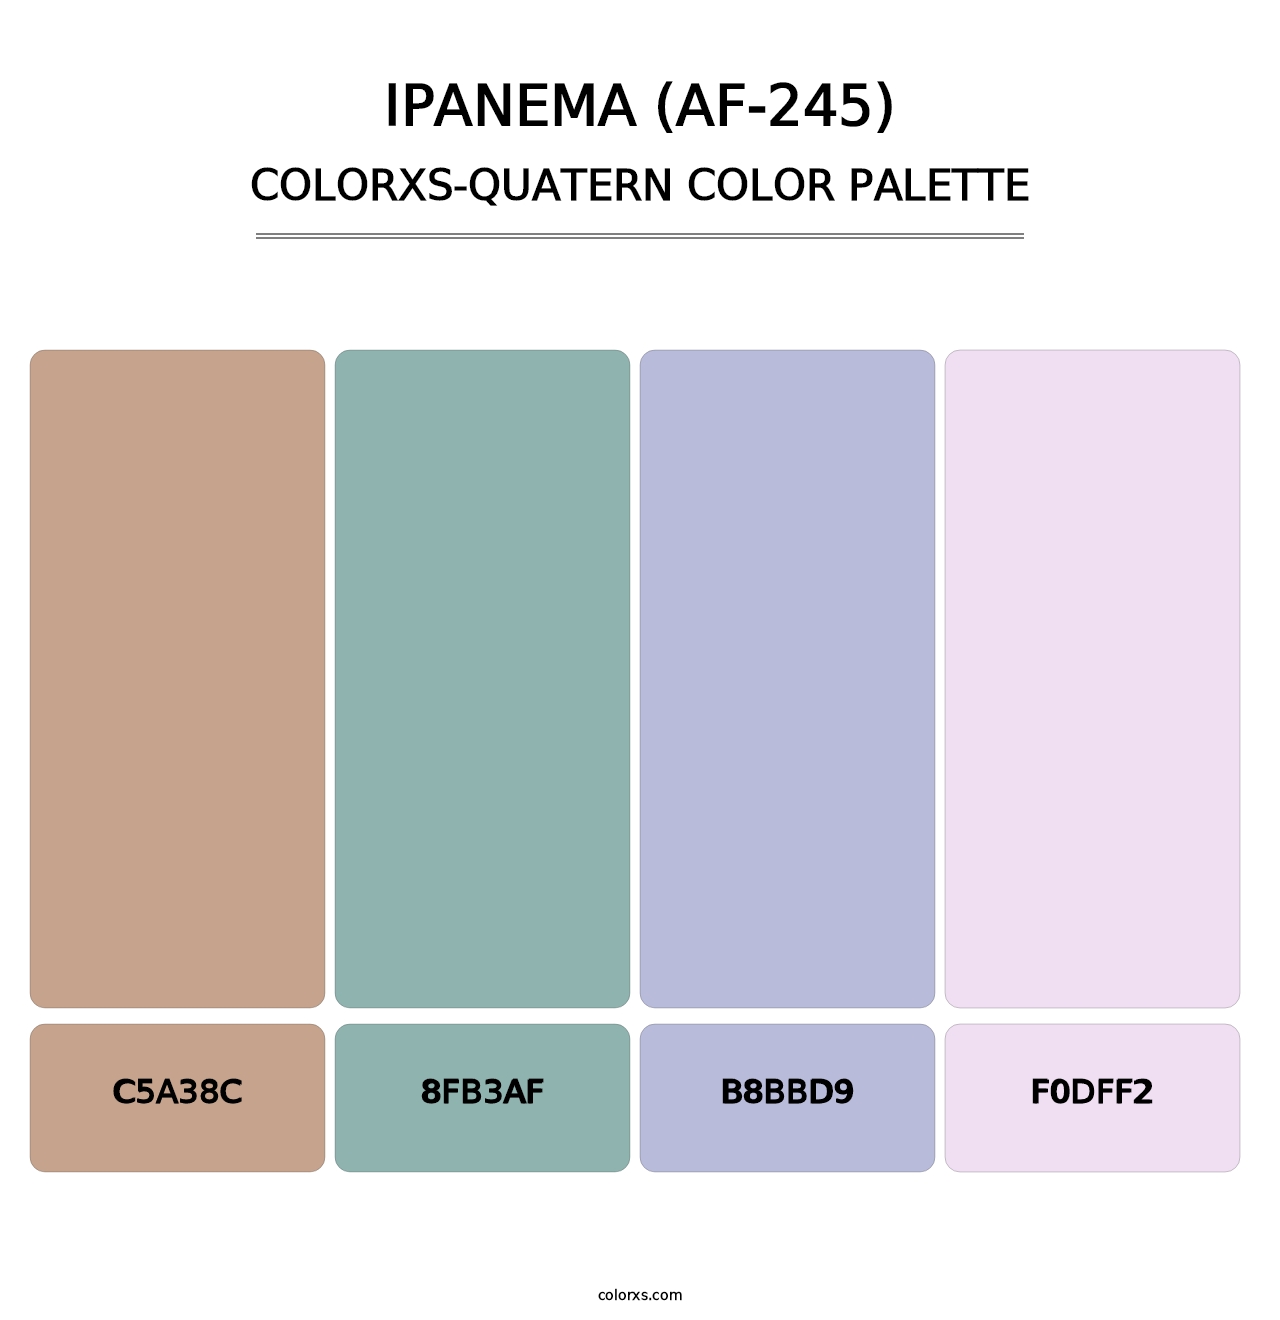 Ipanema (AF-245) - Colorxs Quatern Palette